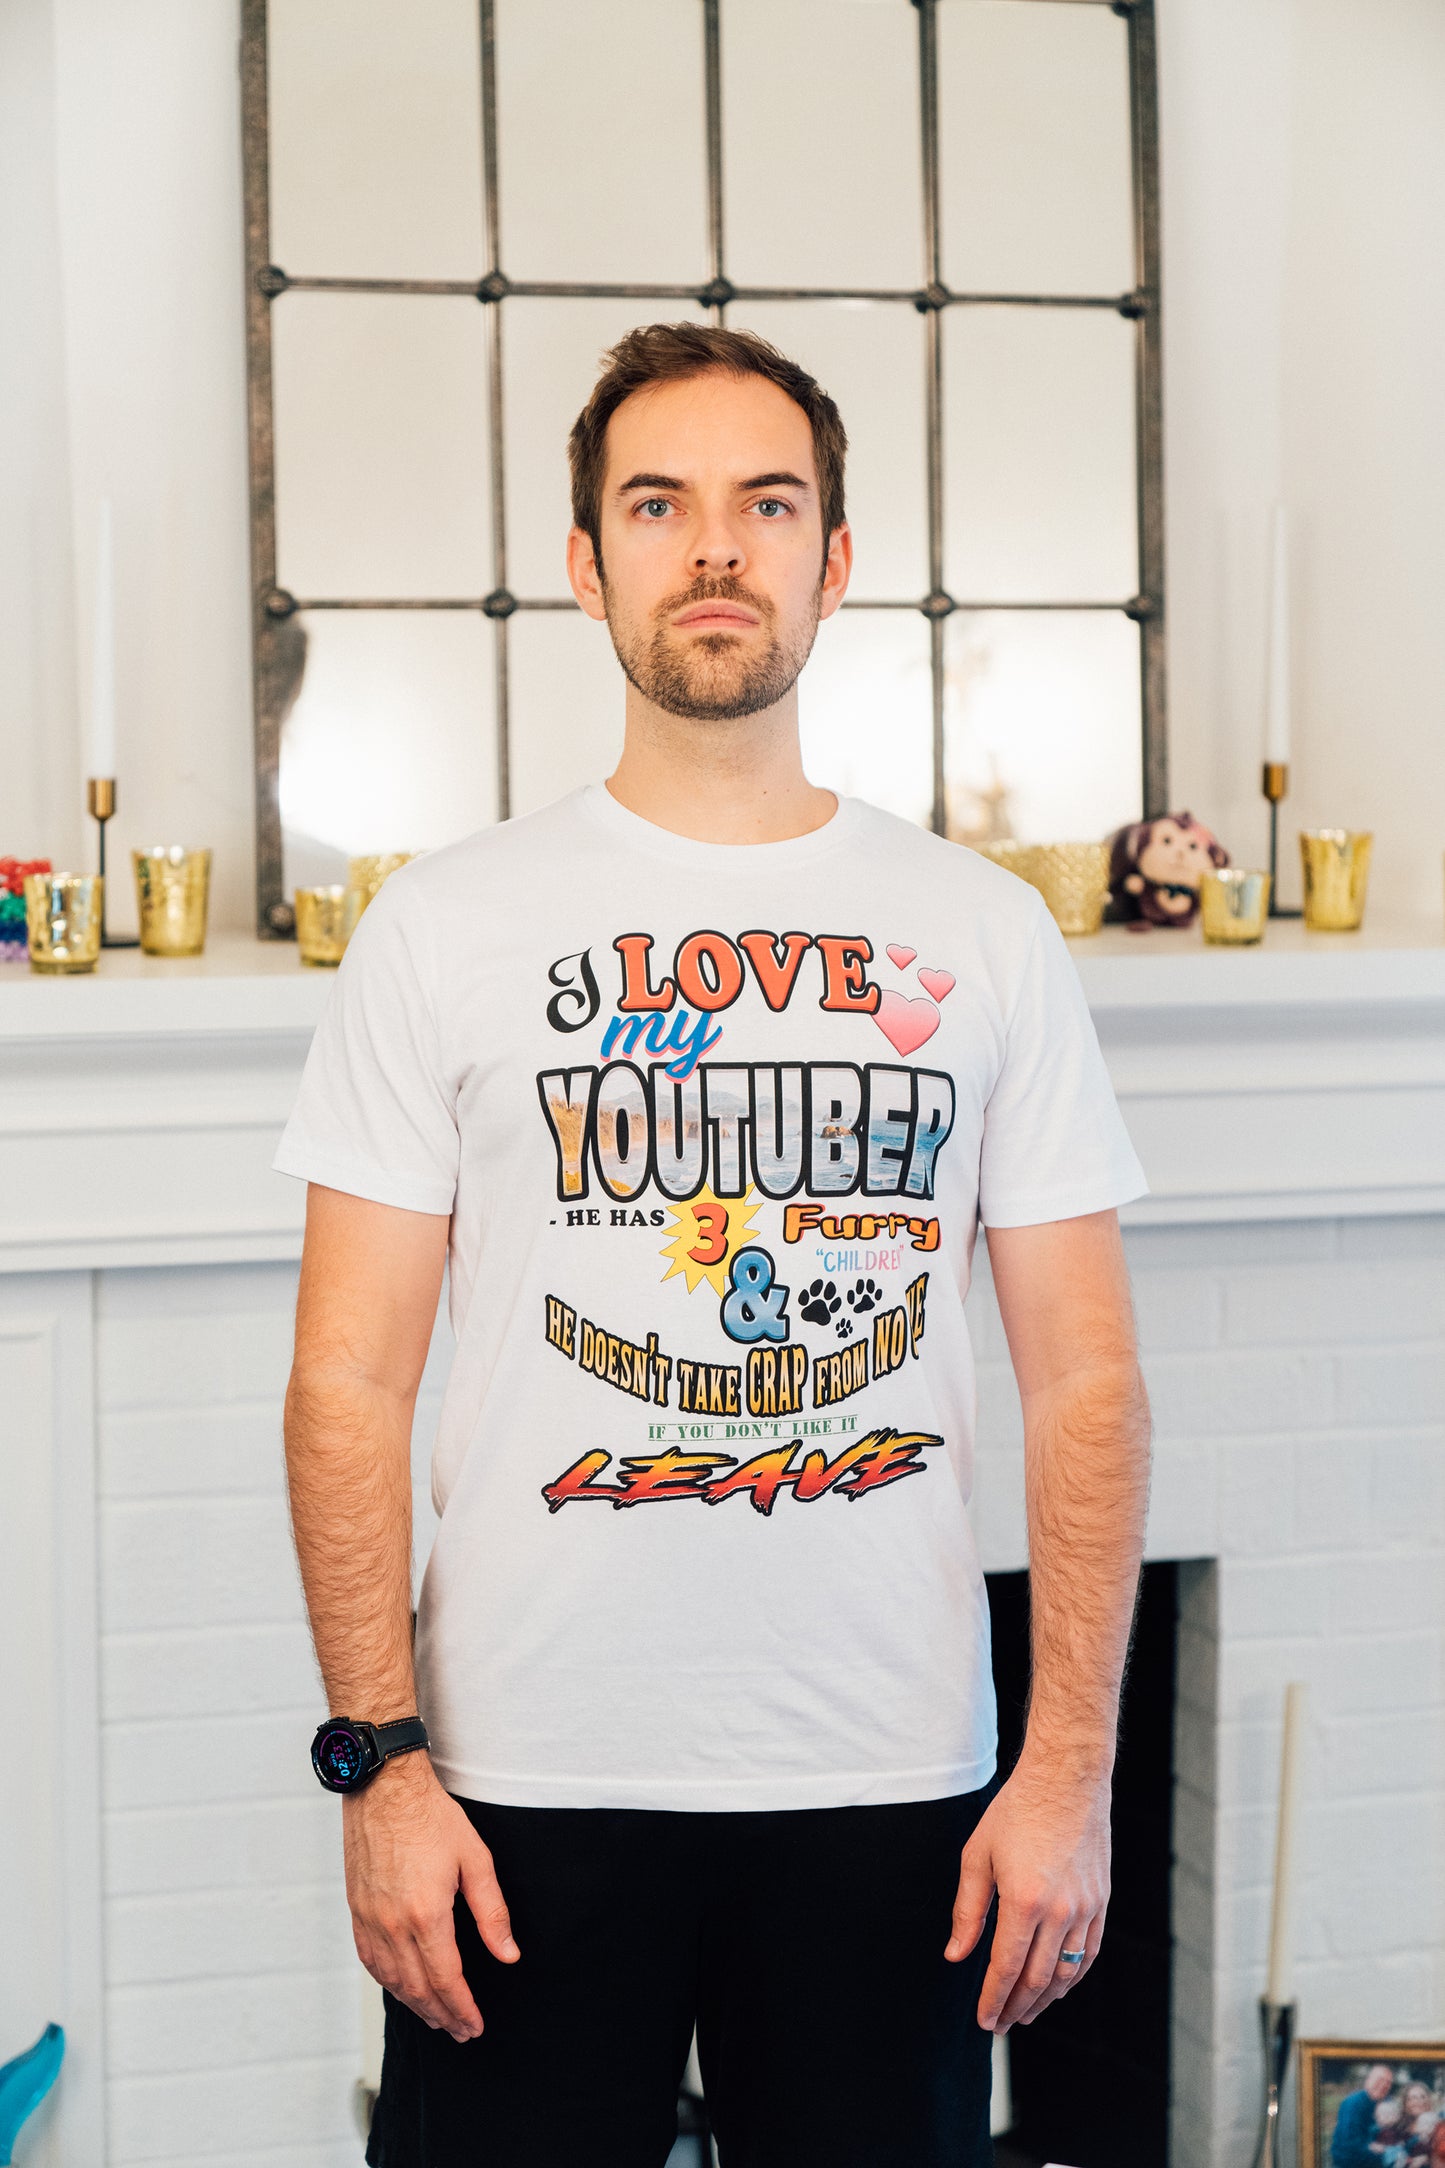 My Favorite YouTuber T-shirt